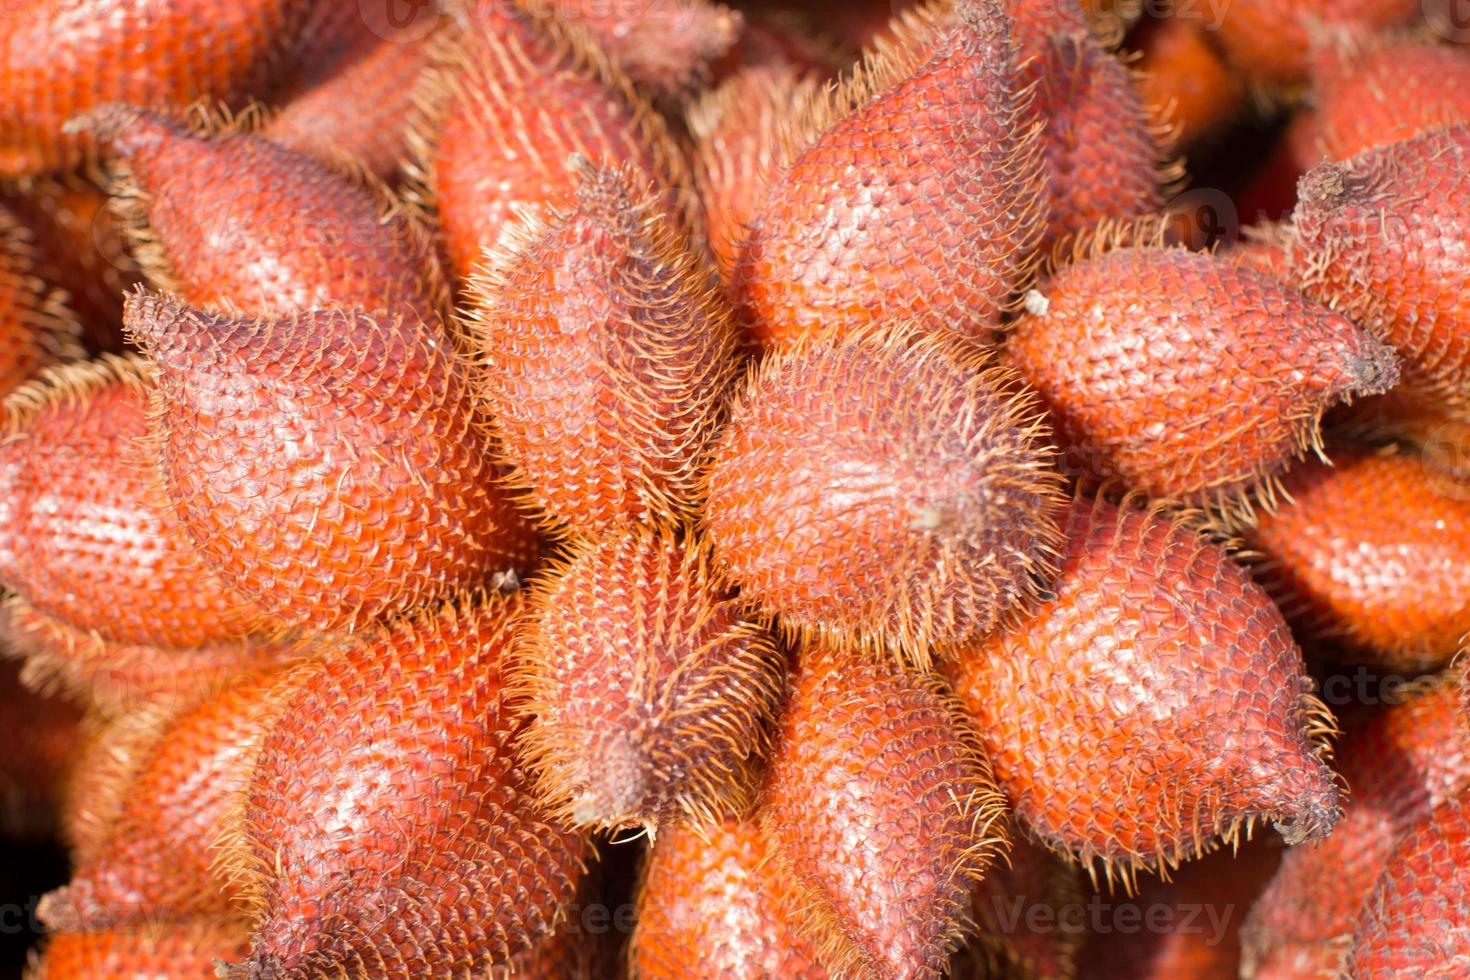 salacca zalacca, söt och röd sur tropisk frukt foto